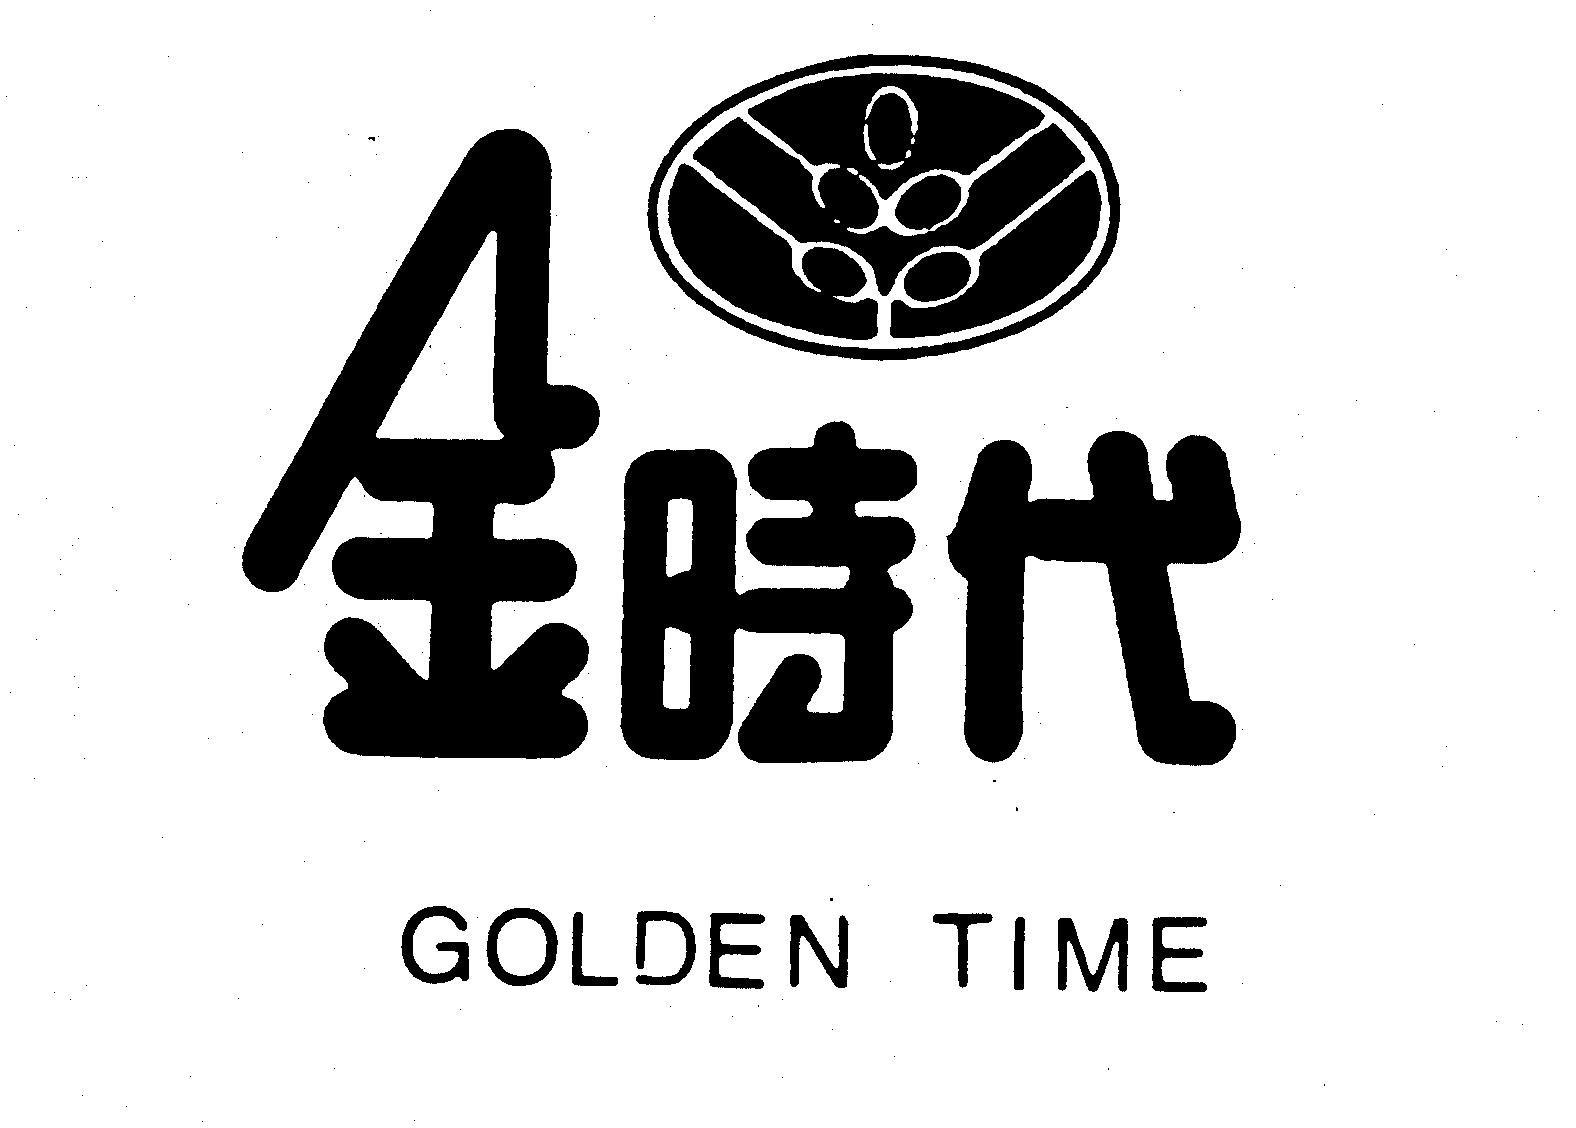 GOLDEN TIME